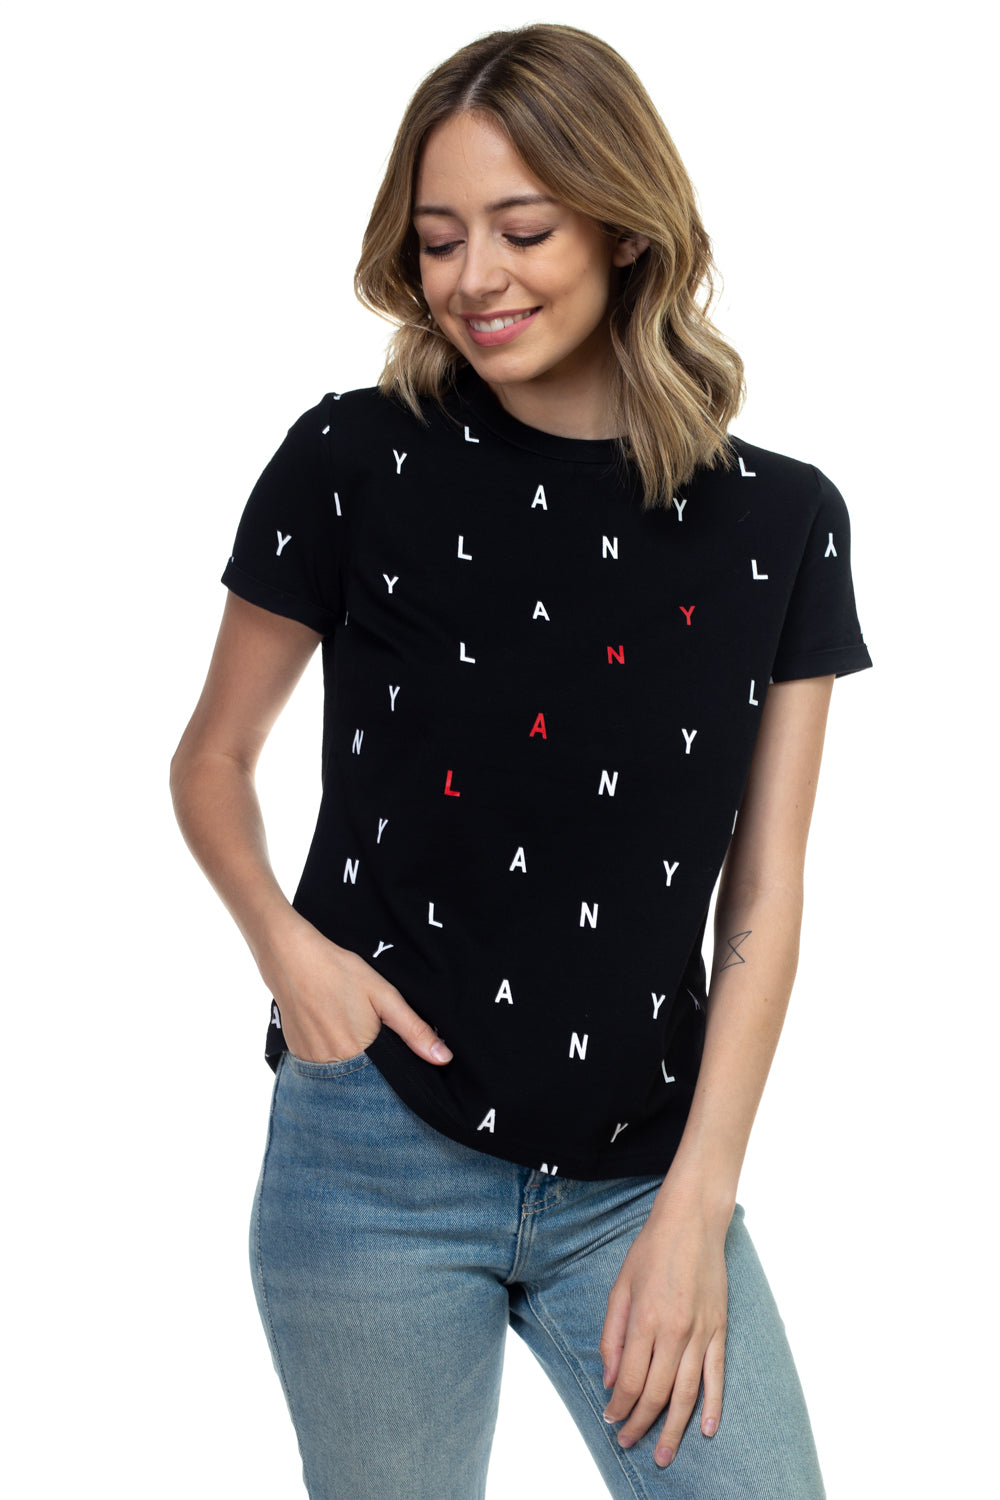 Crossword Shirt - LANY